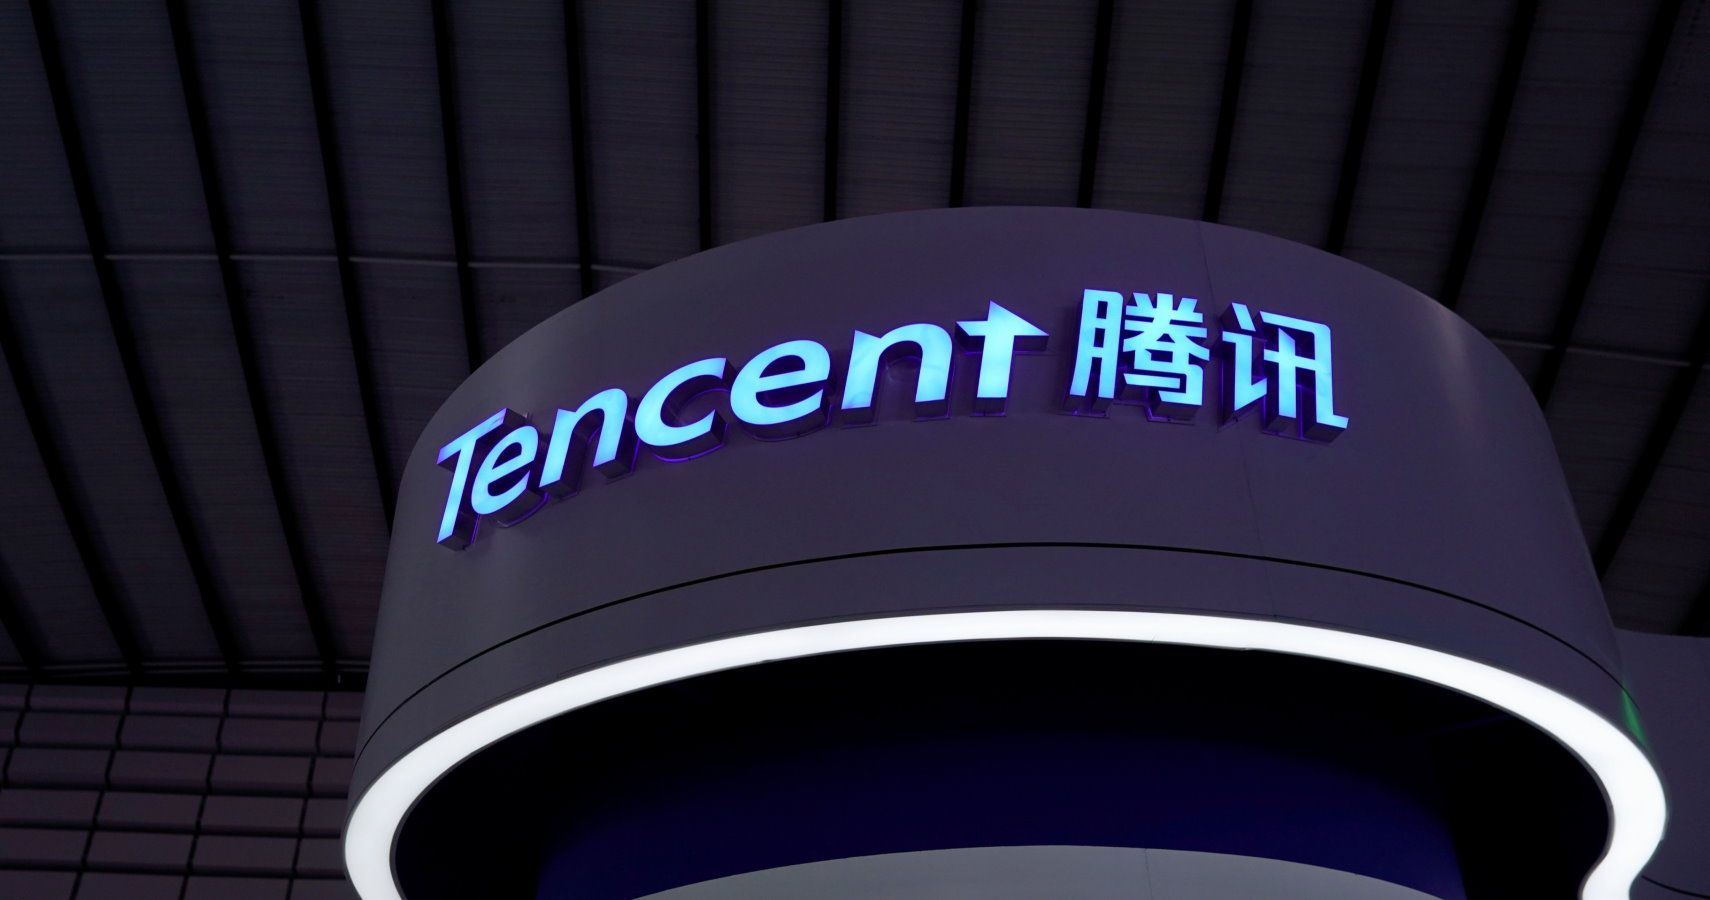 Tencent News